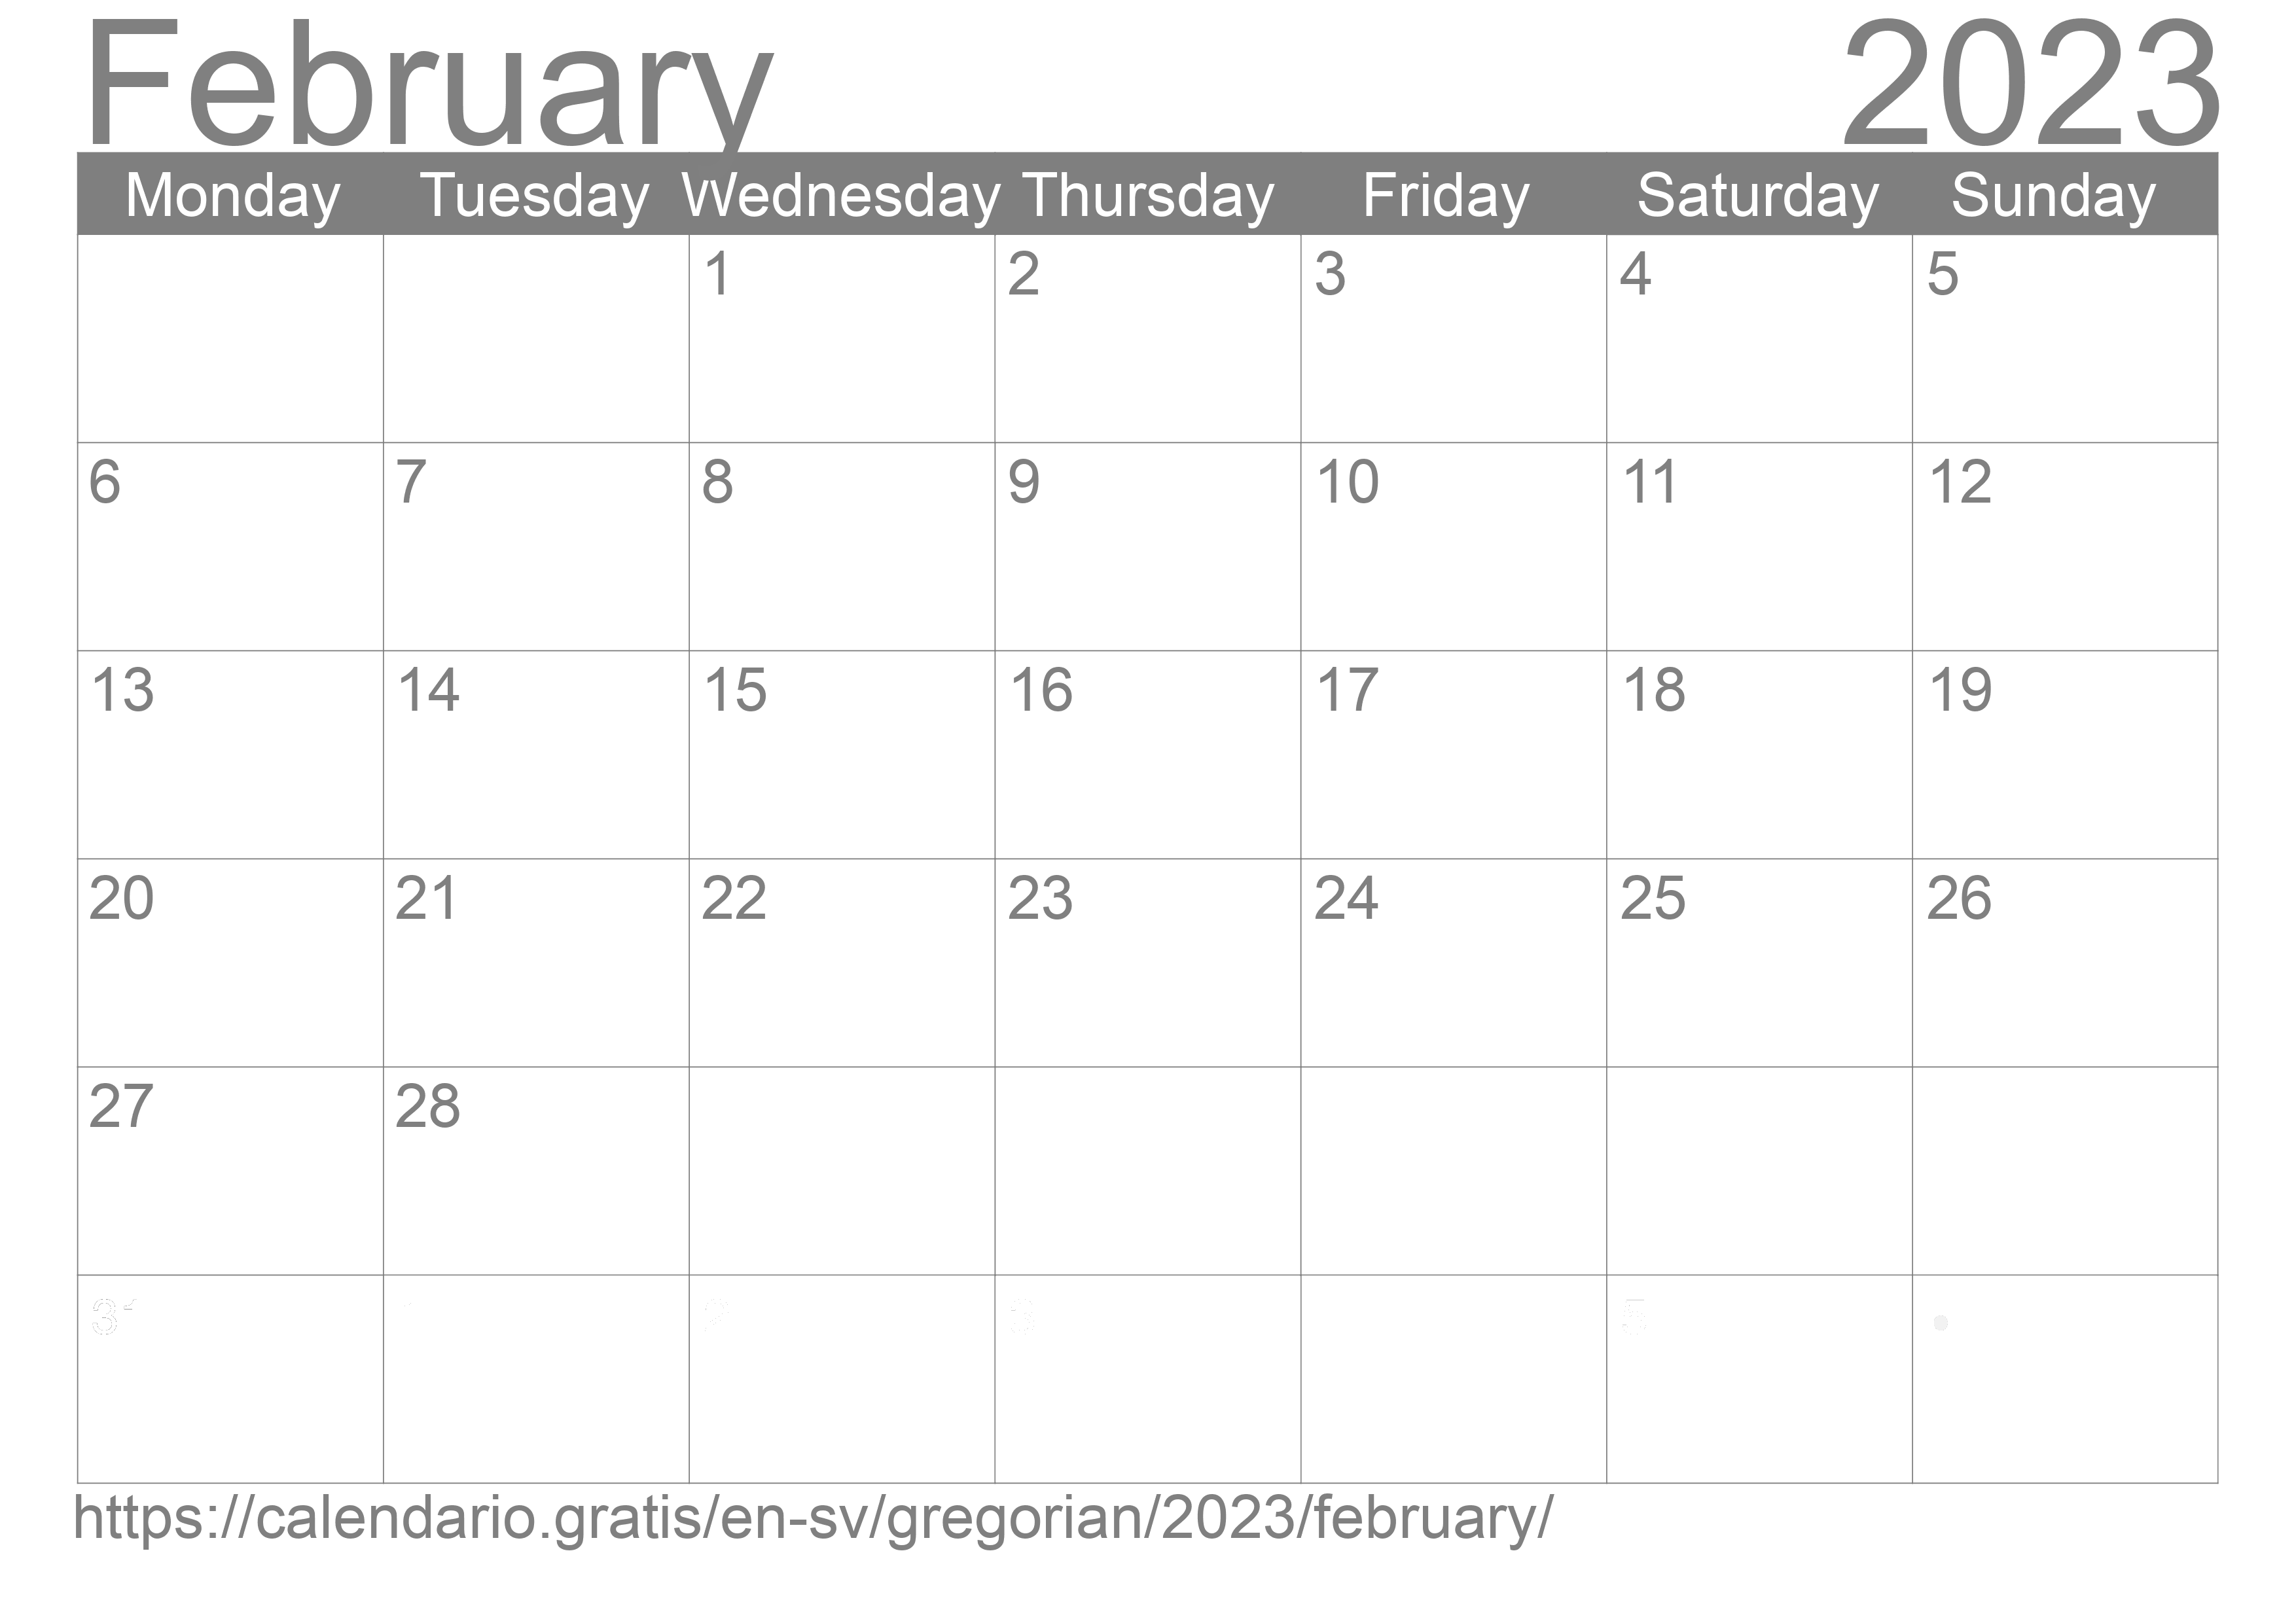 Calendar February 2023 to print